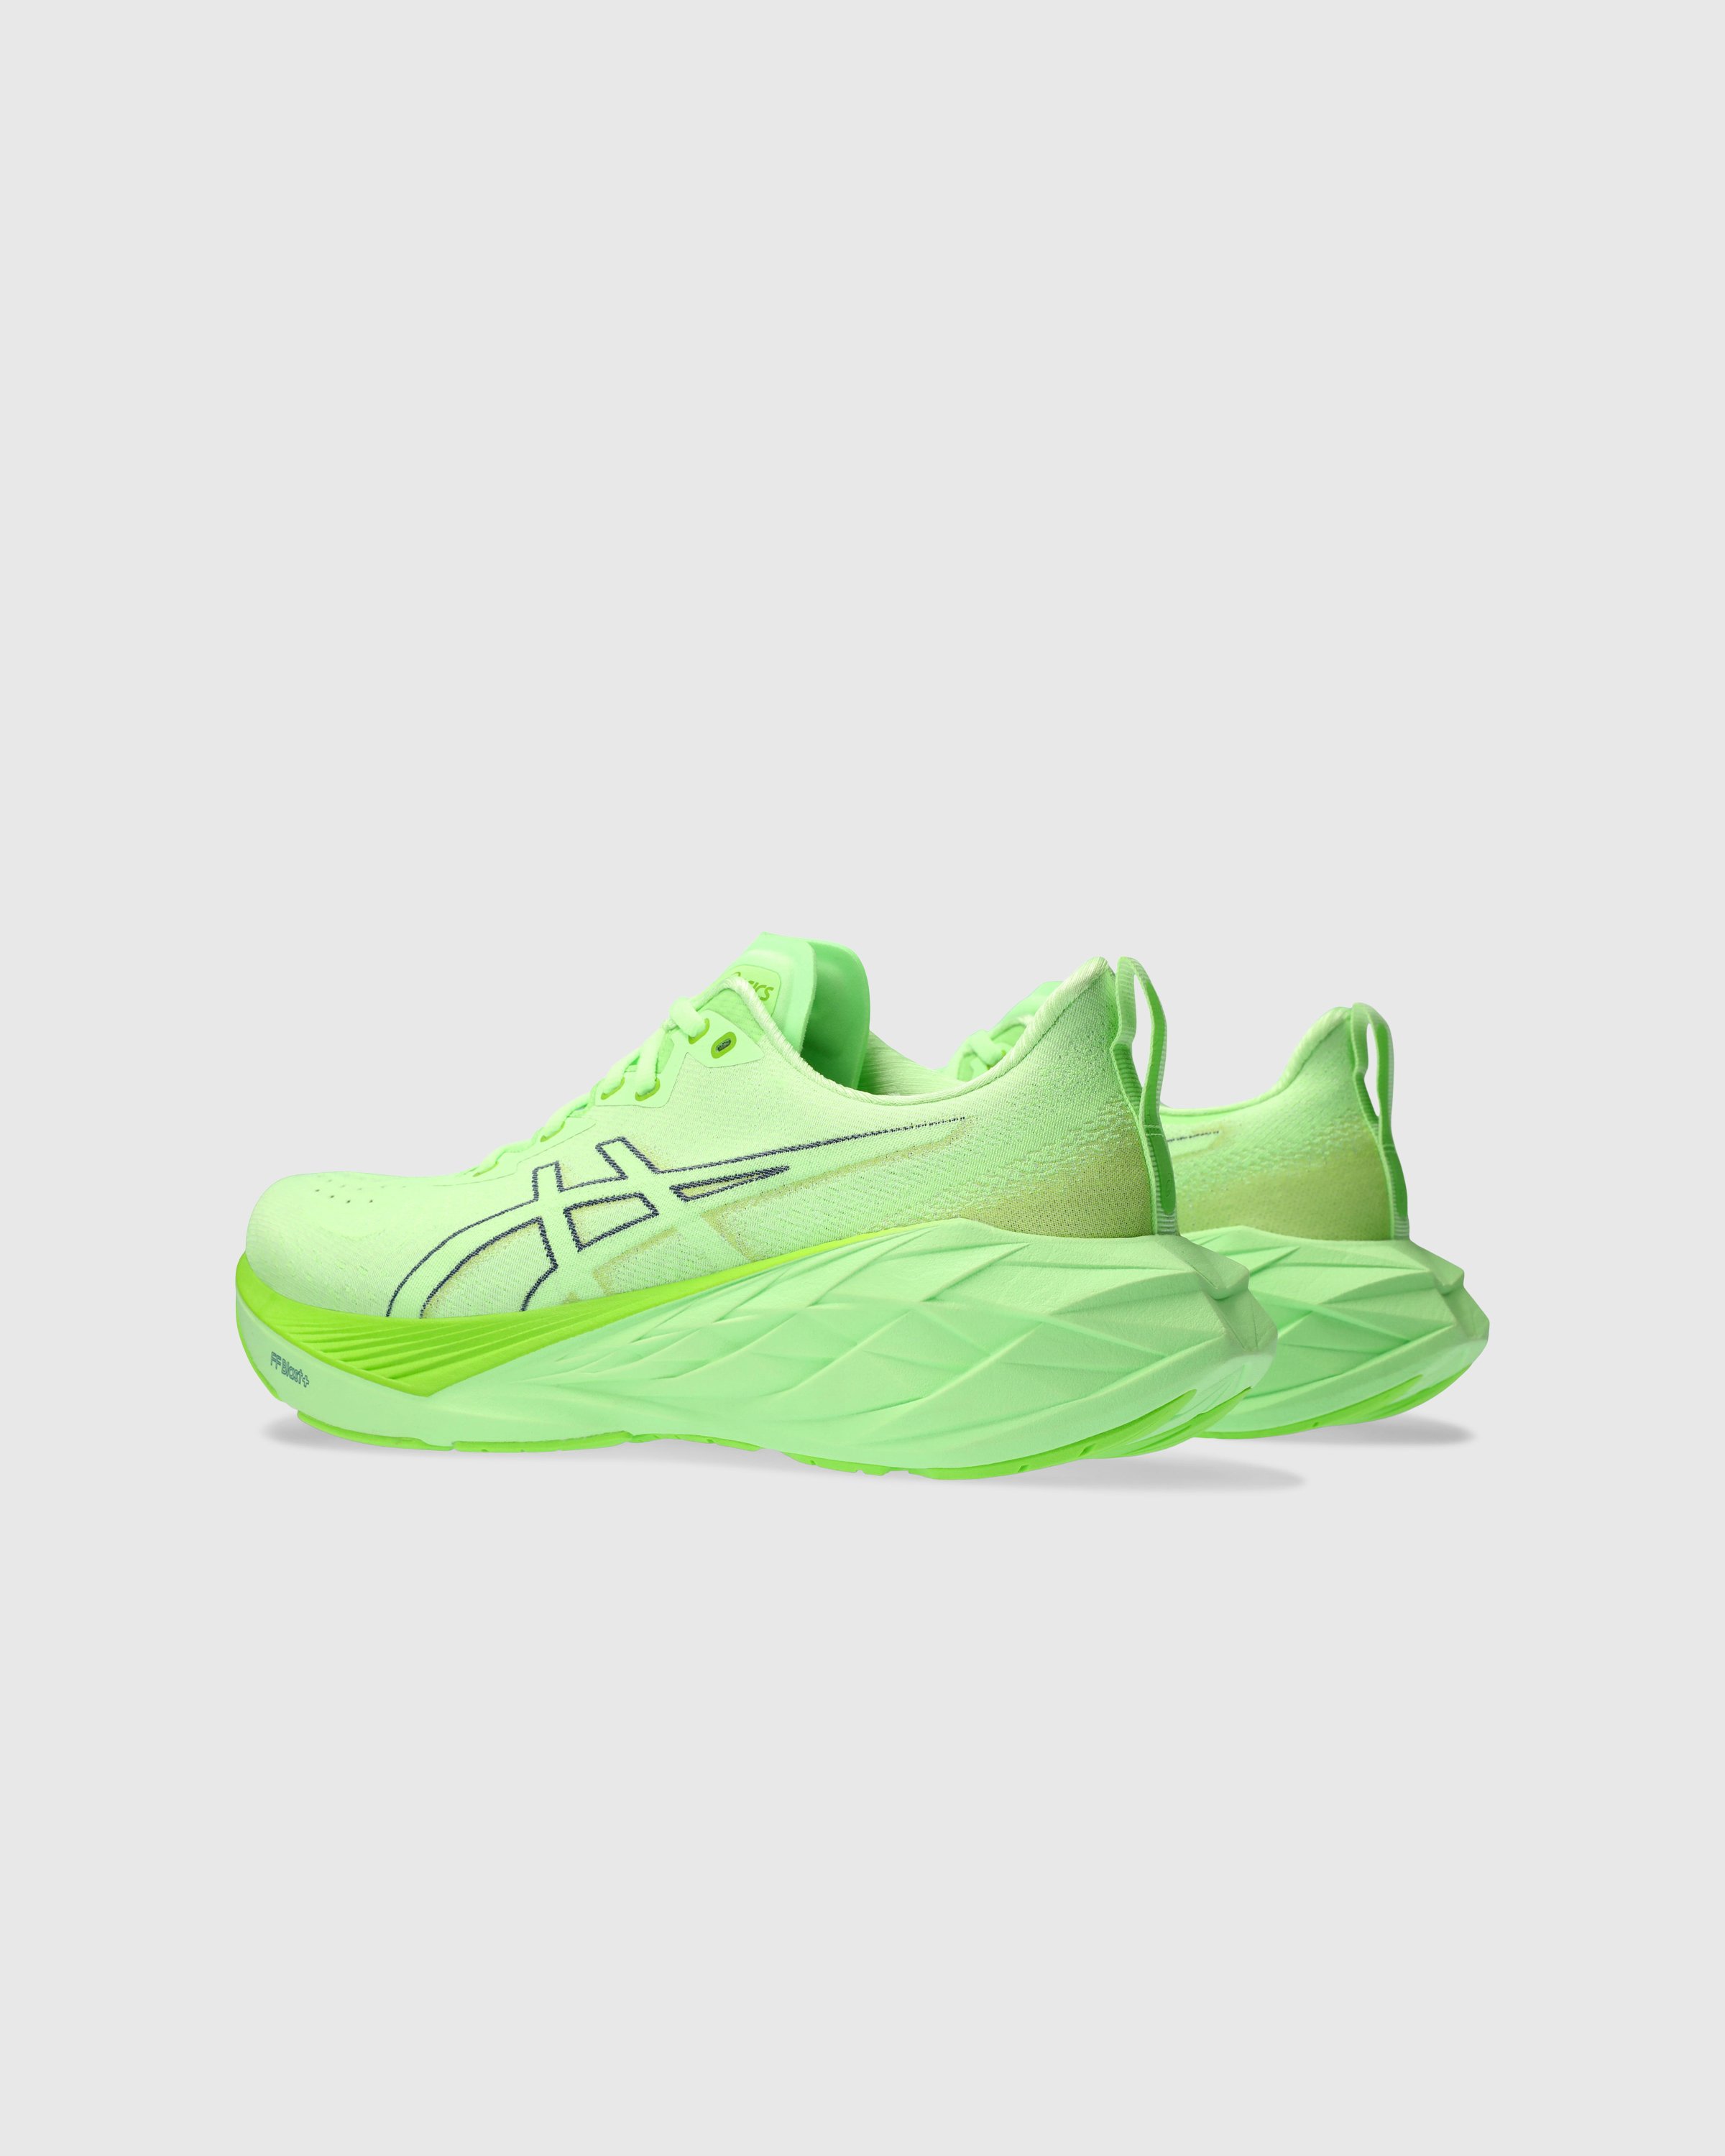 asics - NOVABLAST 4 Illuminate Green/Lime Burst - Footwear - Green - Image 4